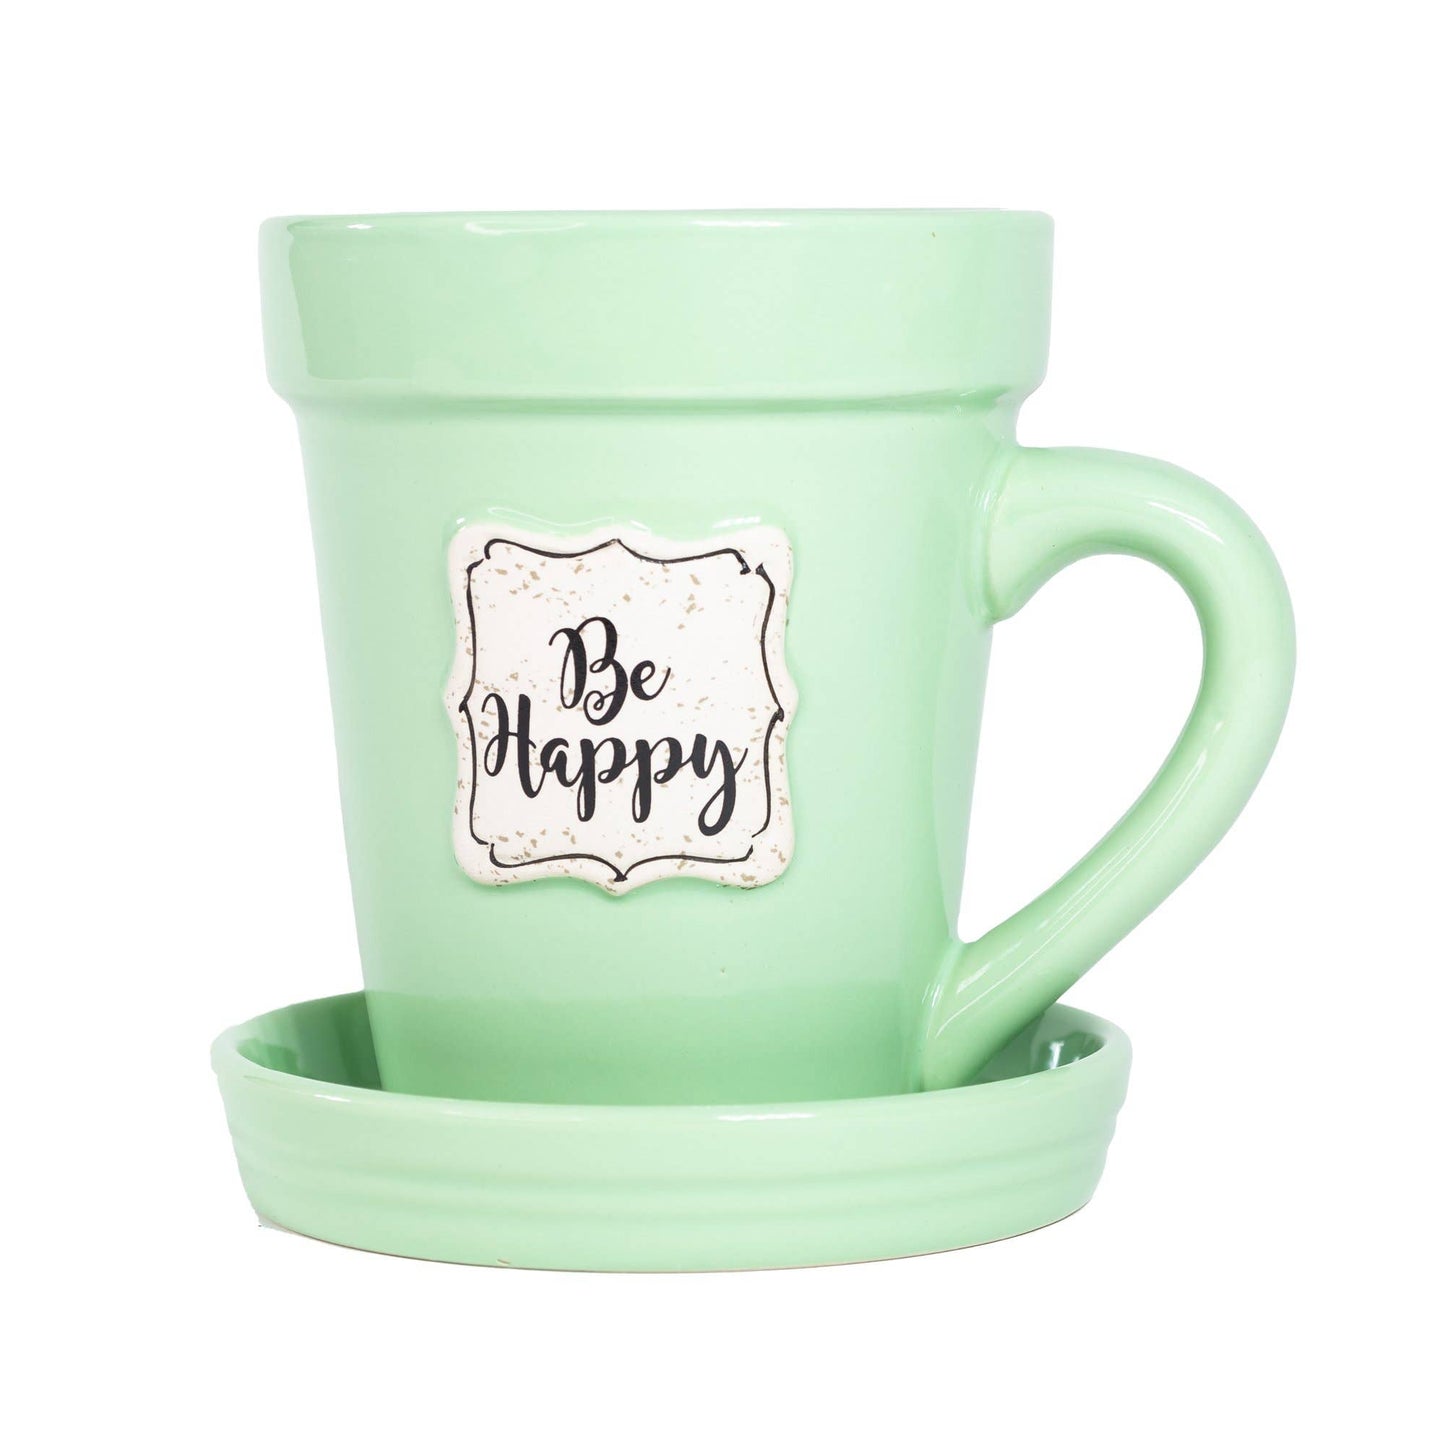 Green Flower Pot Mug w/Scripture - Be Happy